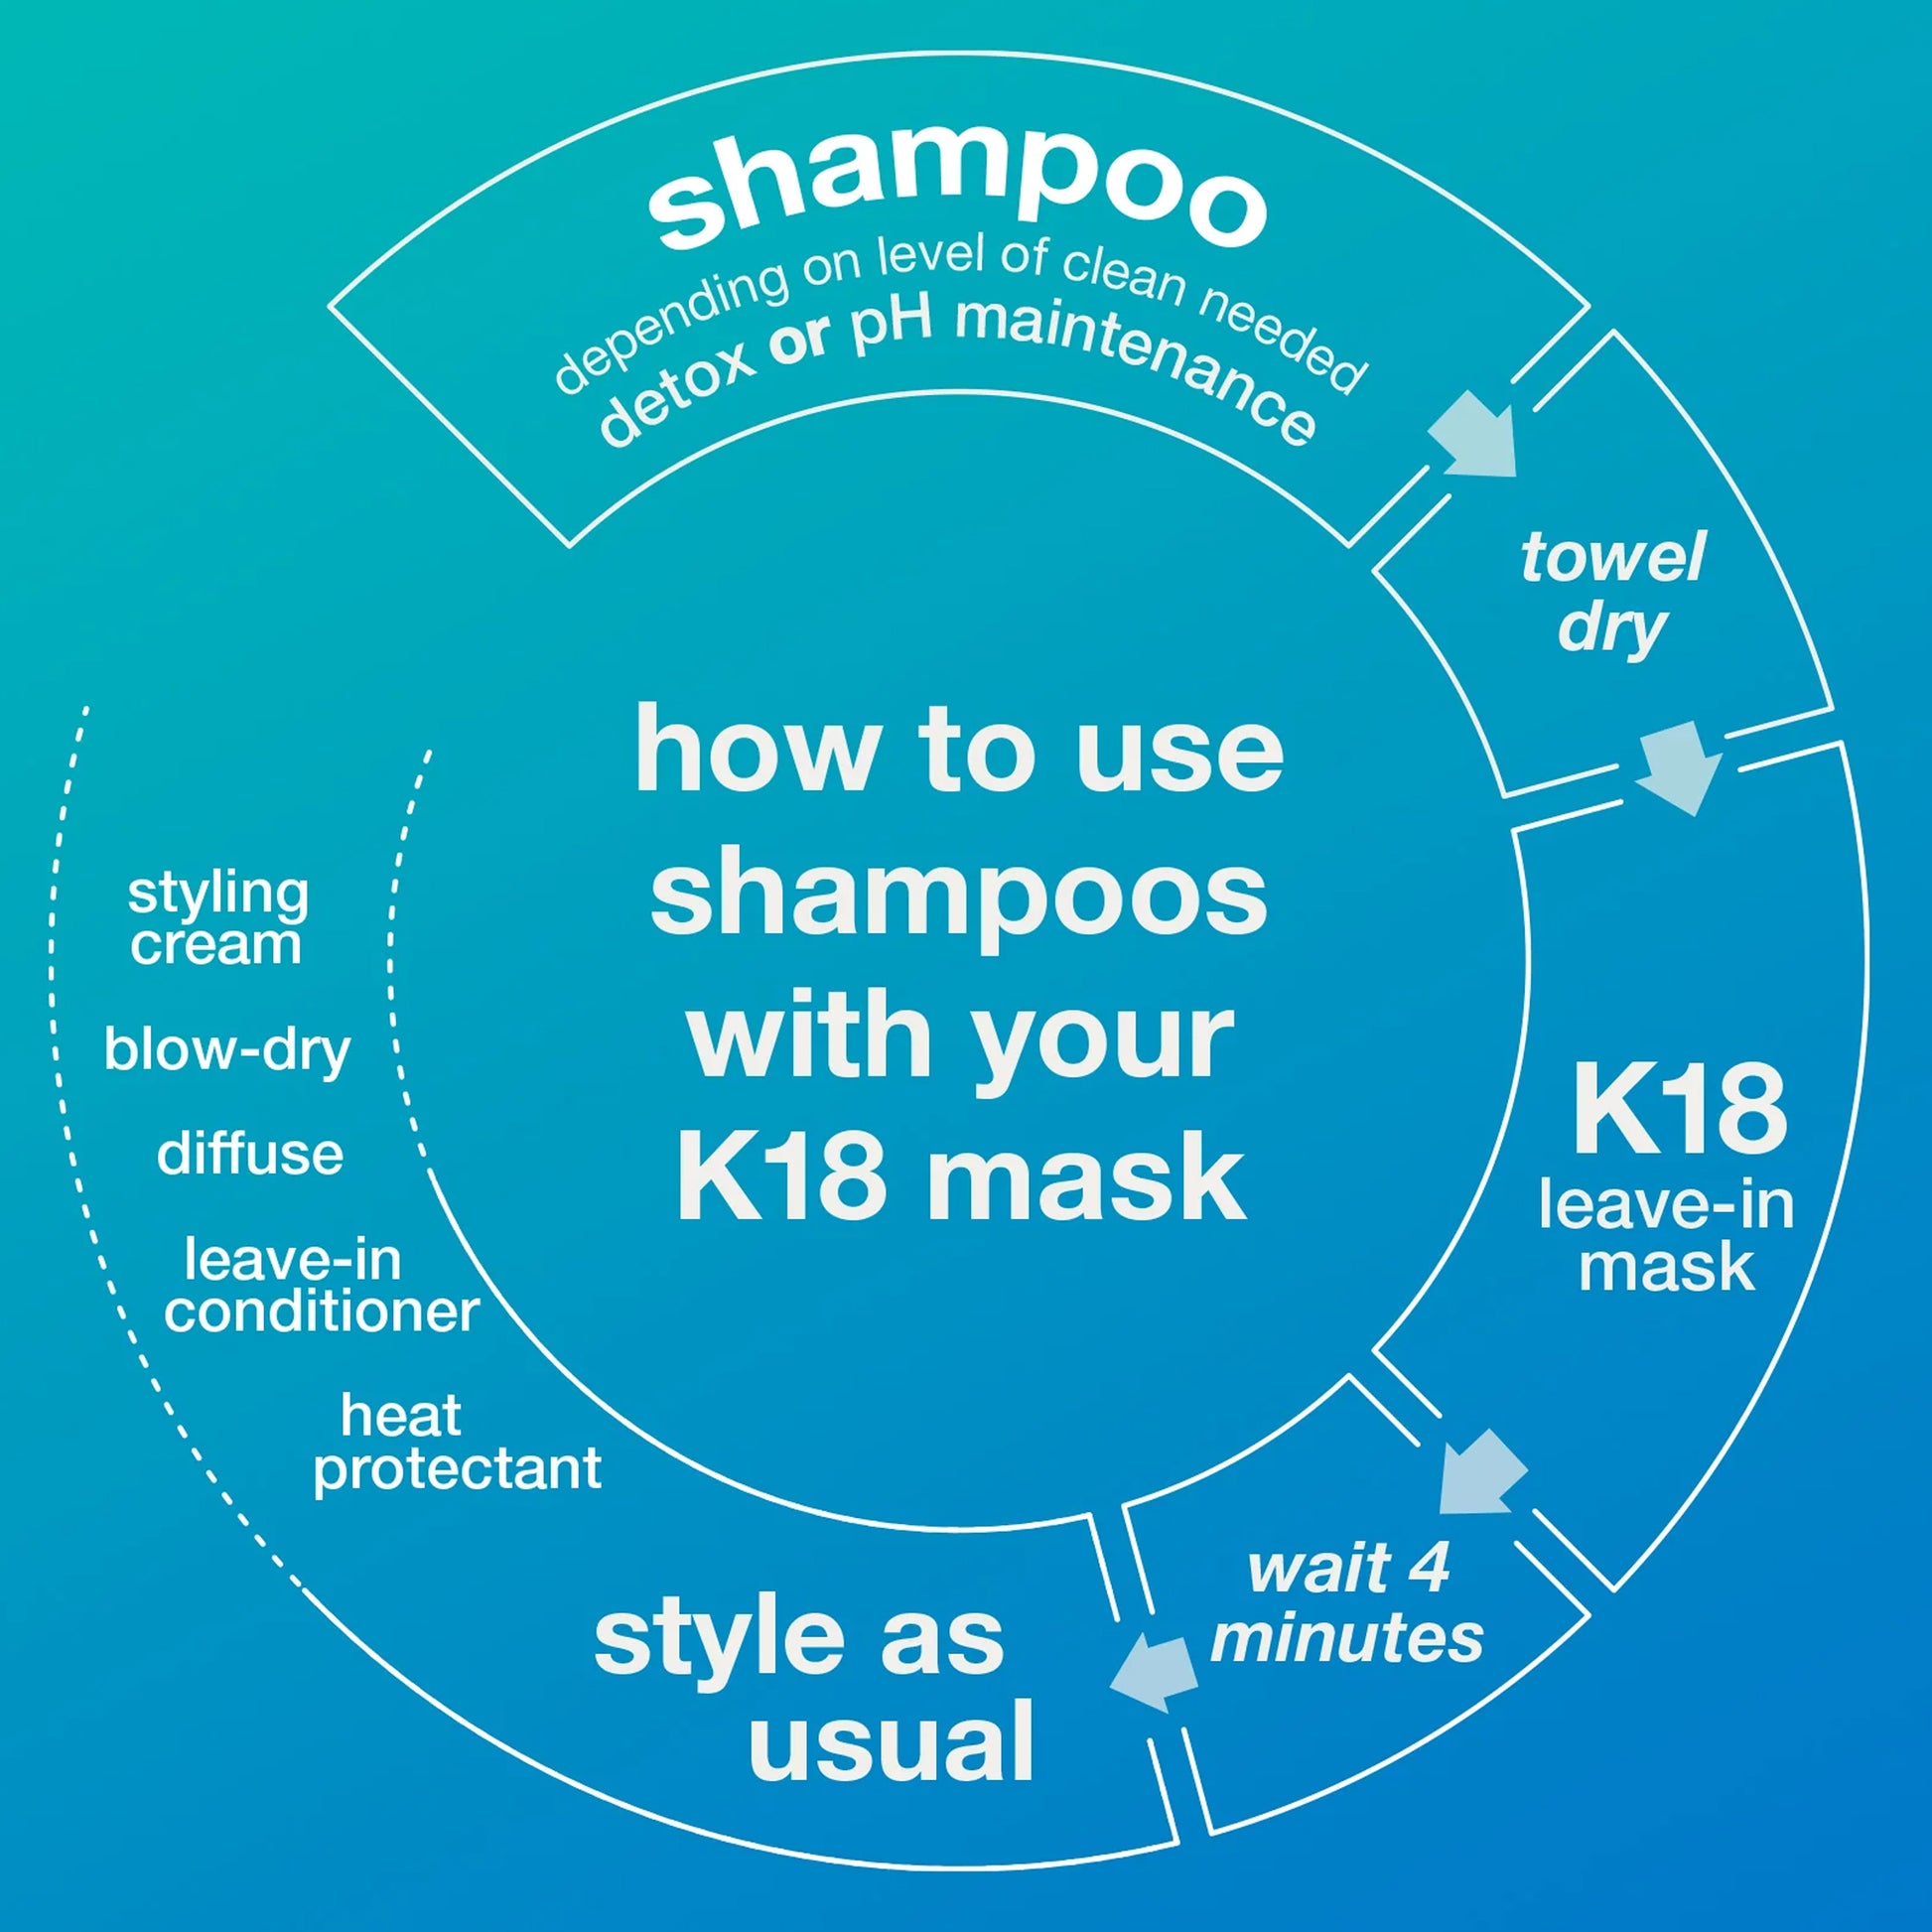 K18 Peptide Prep Detox Shampoo 250 mL